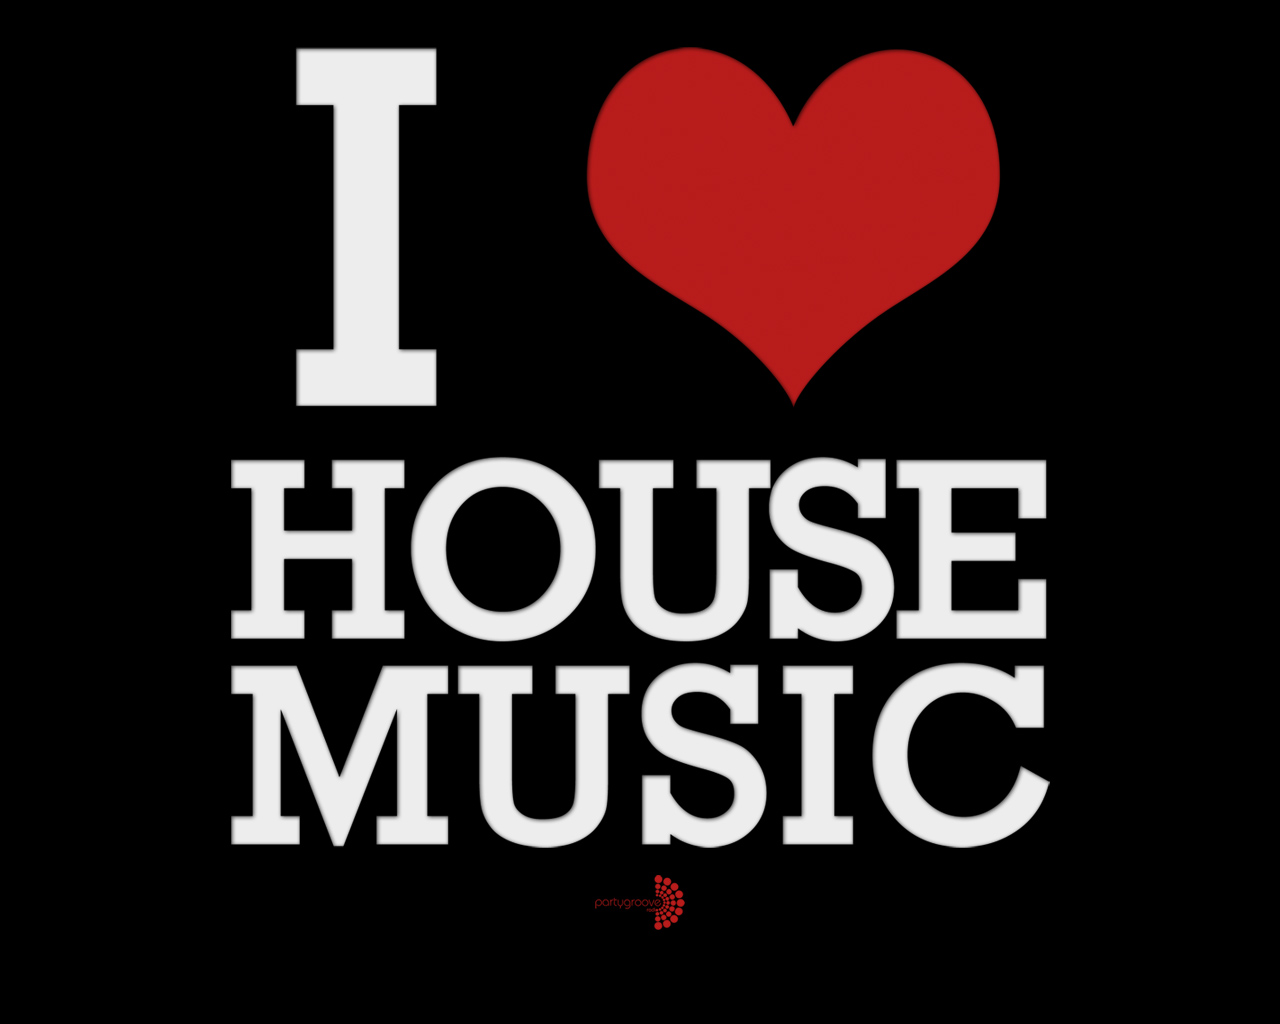 Download this House Music Estilo Musical Surgido Chicago Nos Estados Unidos picture